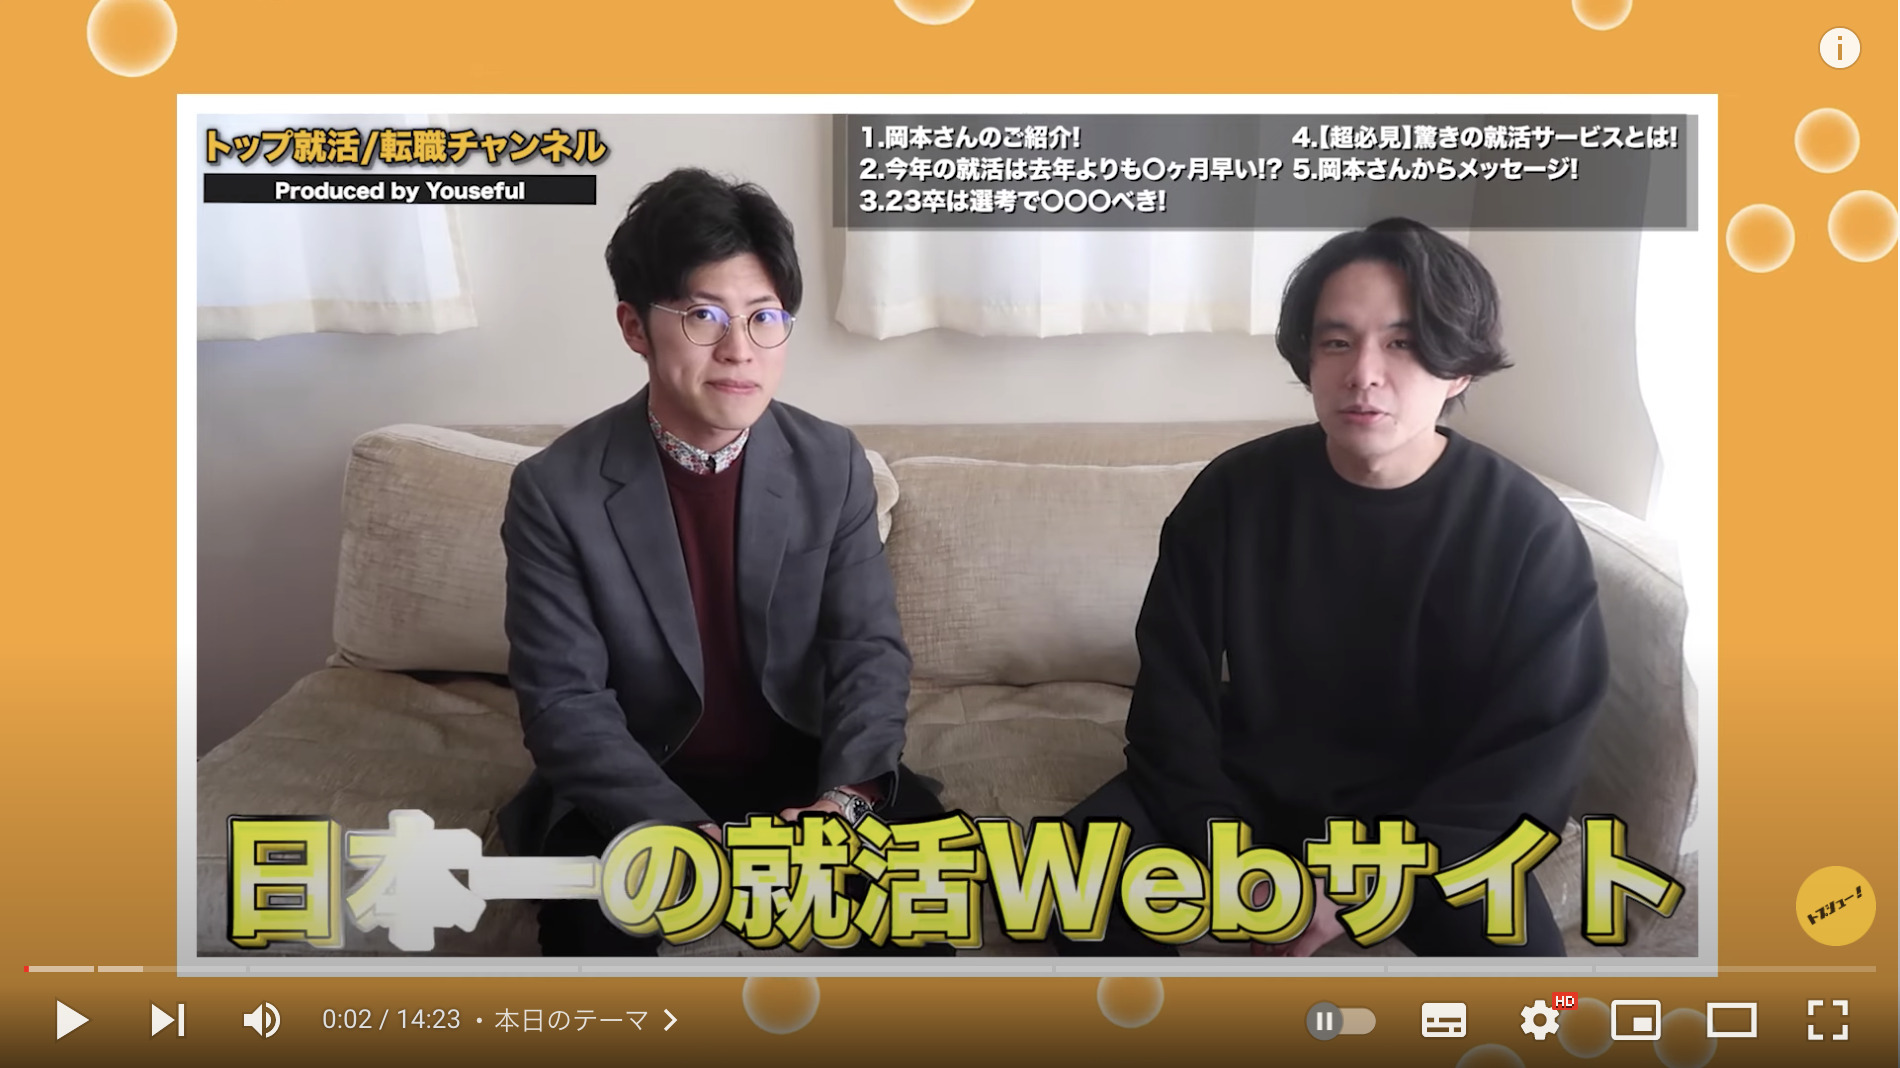 YouTube「トップ就活 / 転職チャンネル」に、弊社代表 岡本恵典が出演しました！